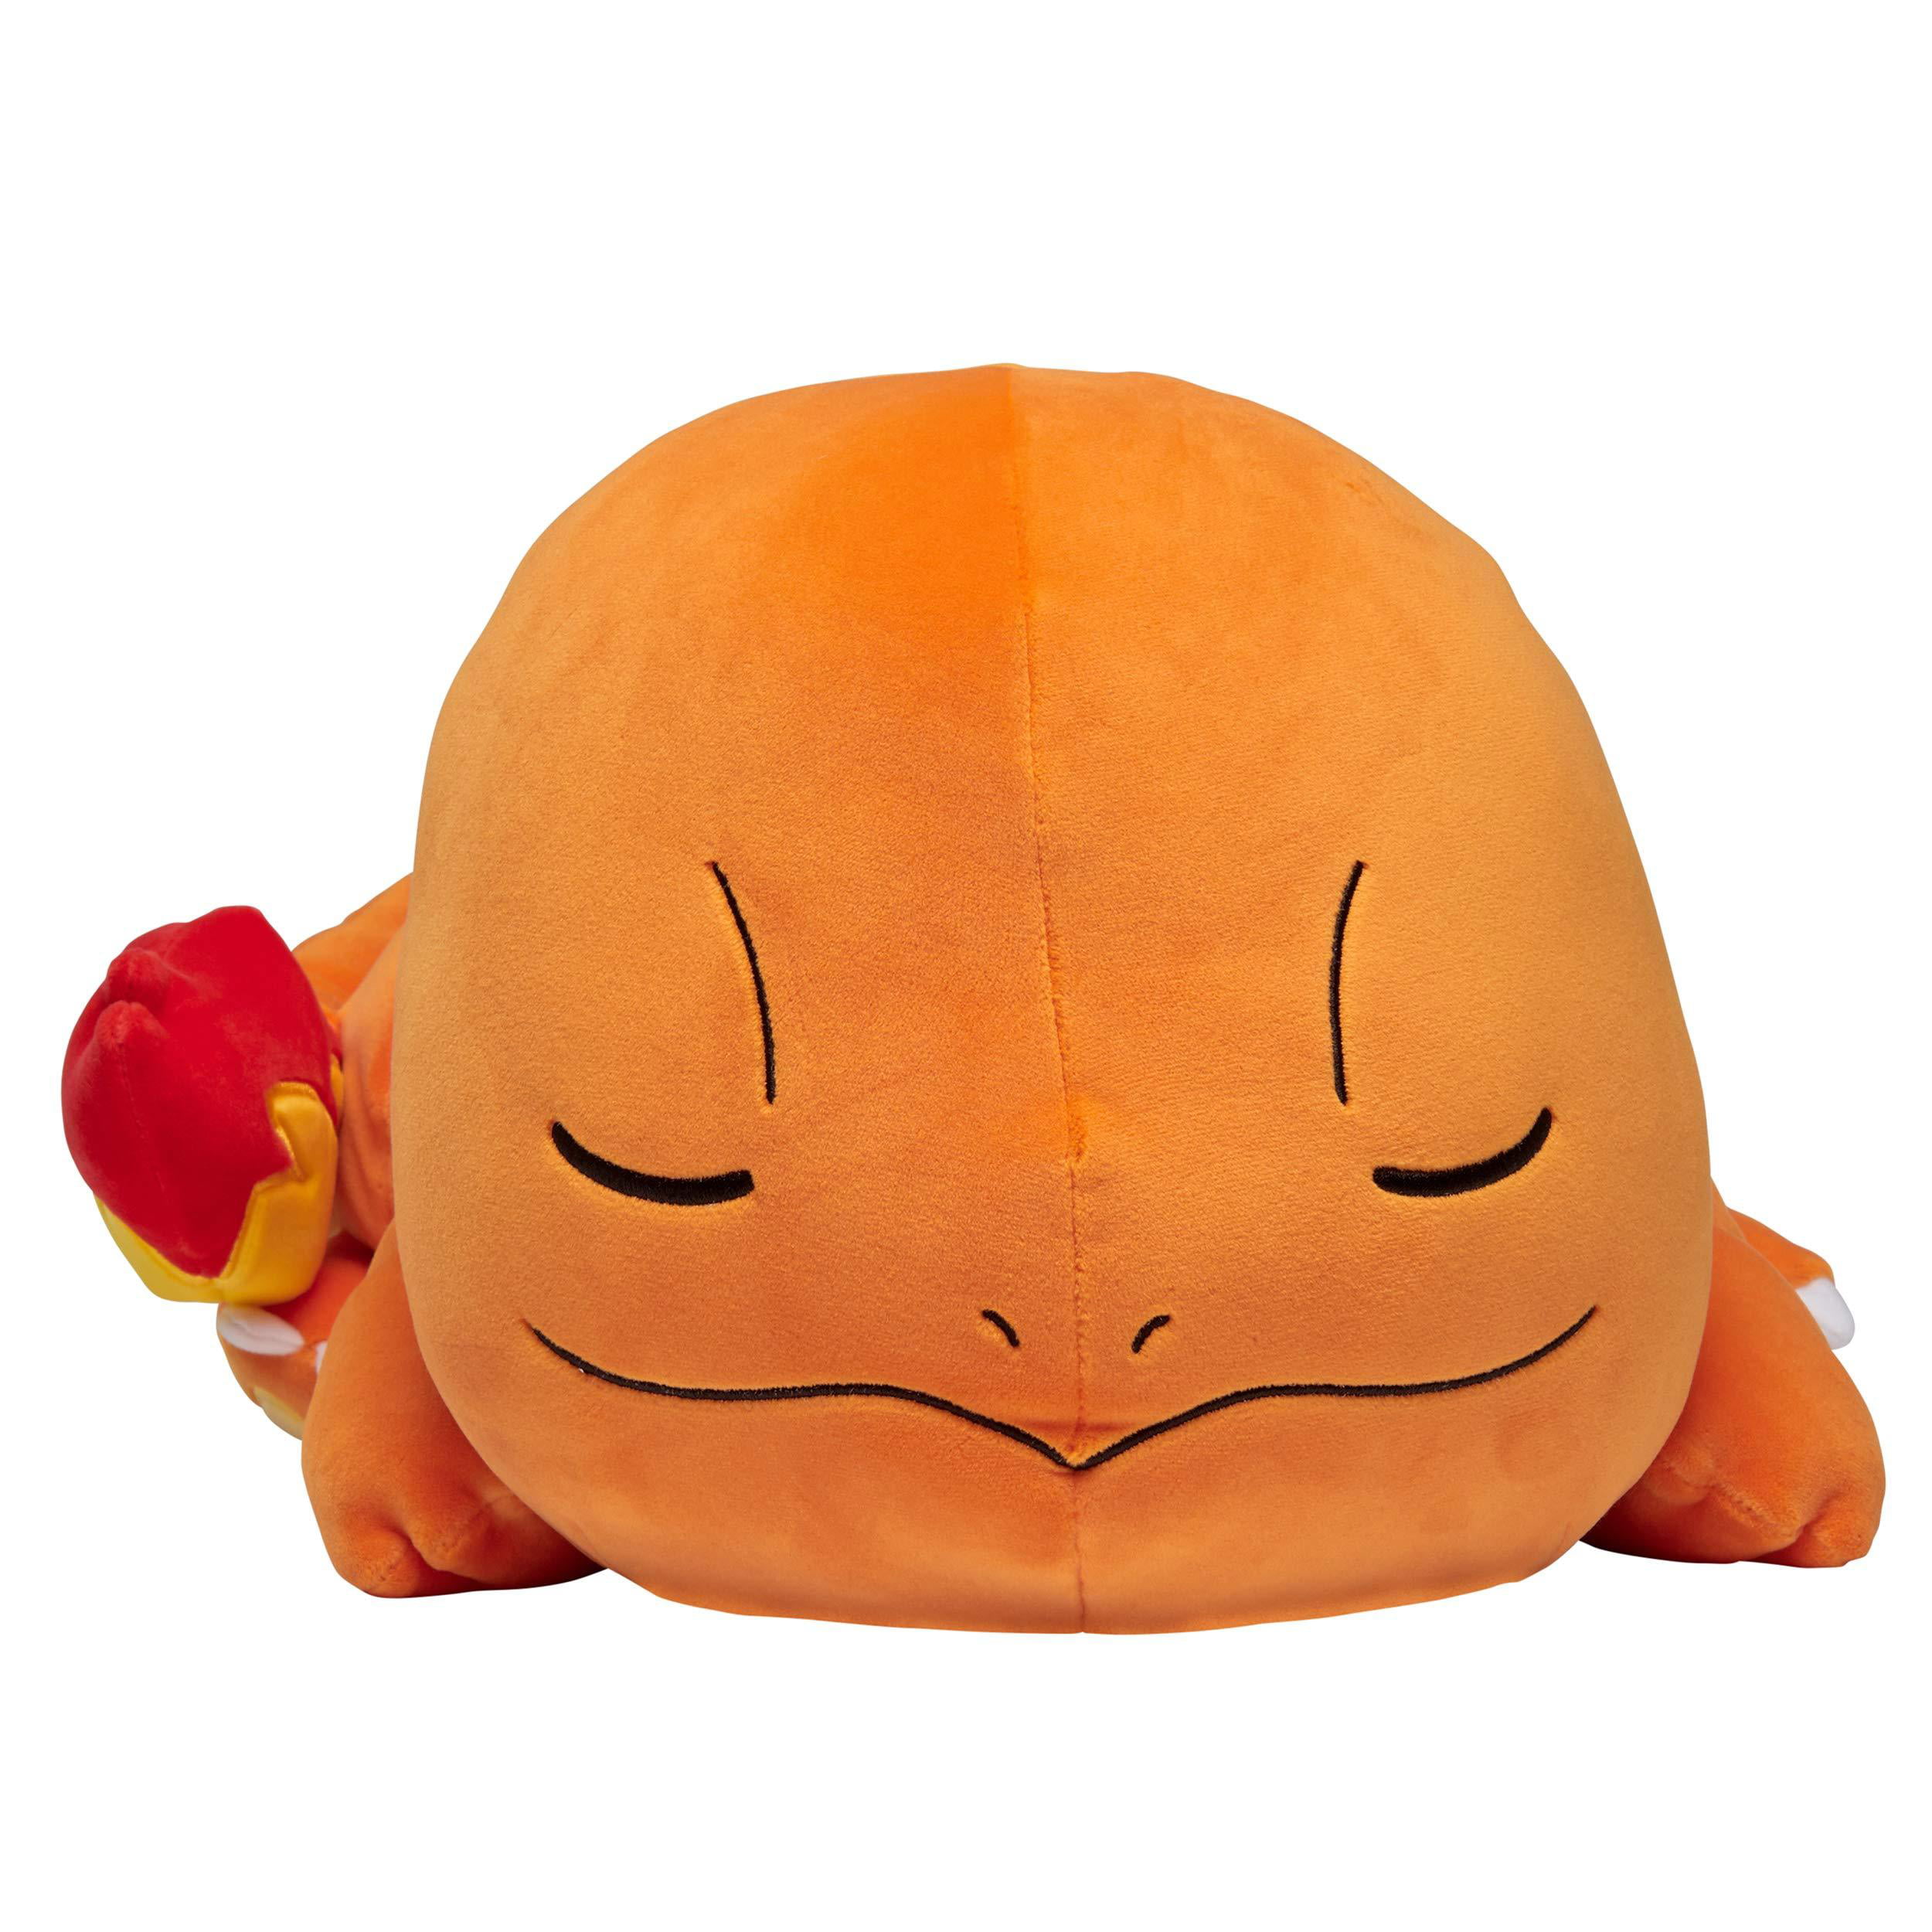 Charmander Hitokage Pokemon Plush Toy Starter Kanto Fire Type Stuffed Animal 5"